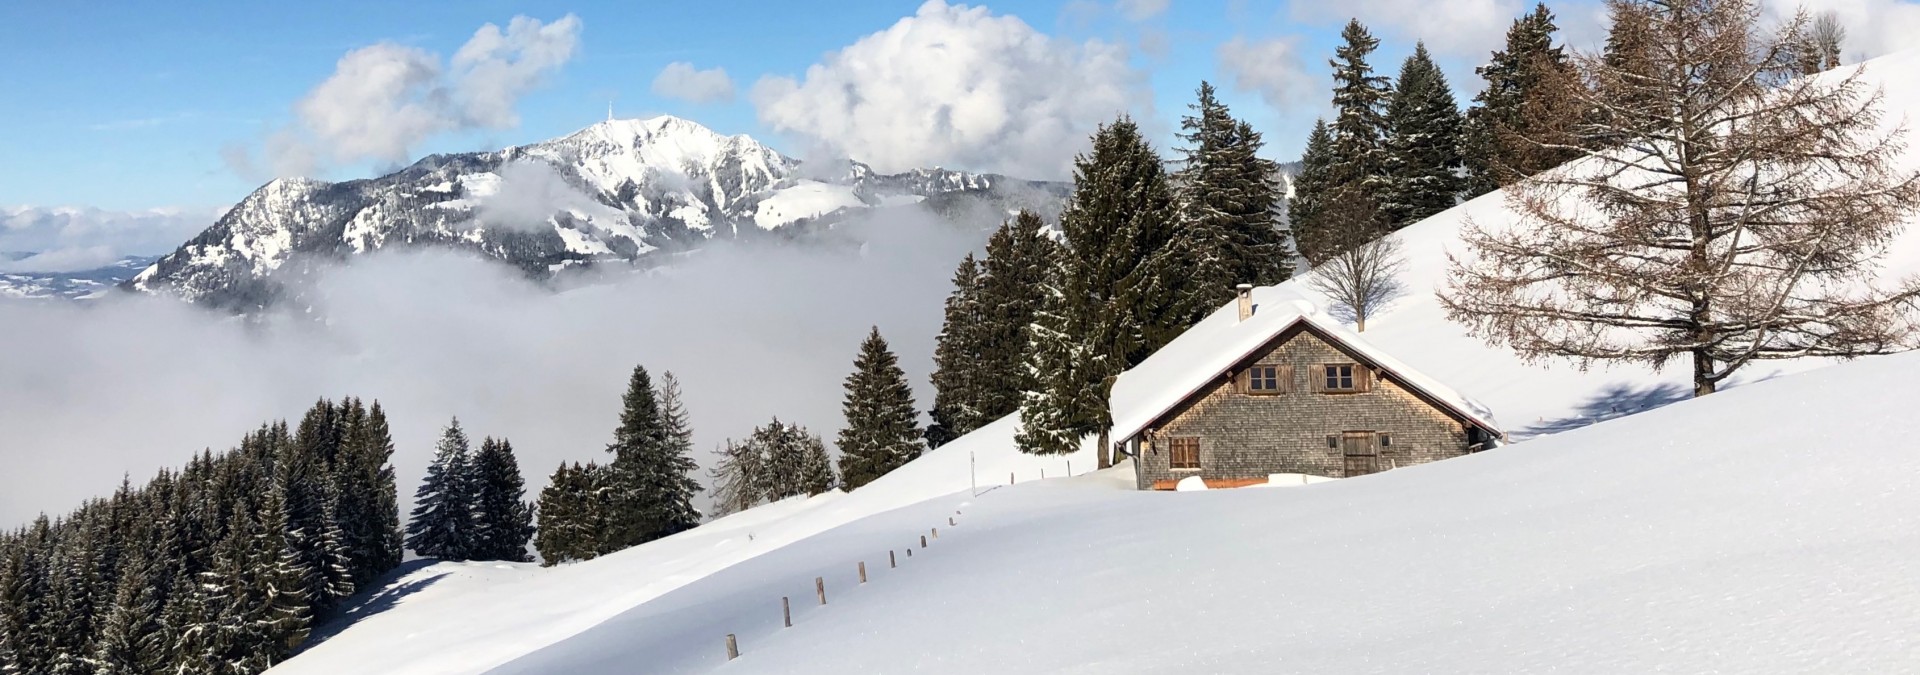 Snowshoeing in the Allgäu Alps